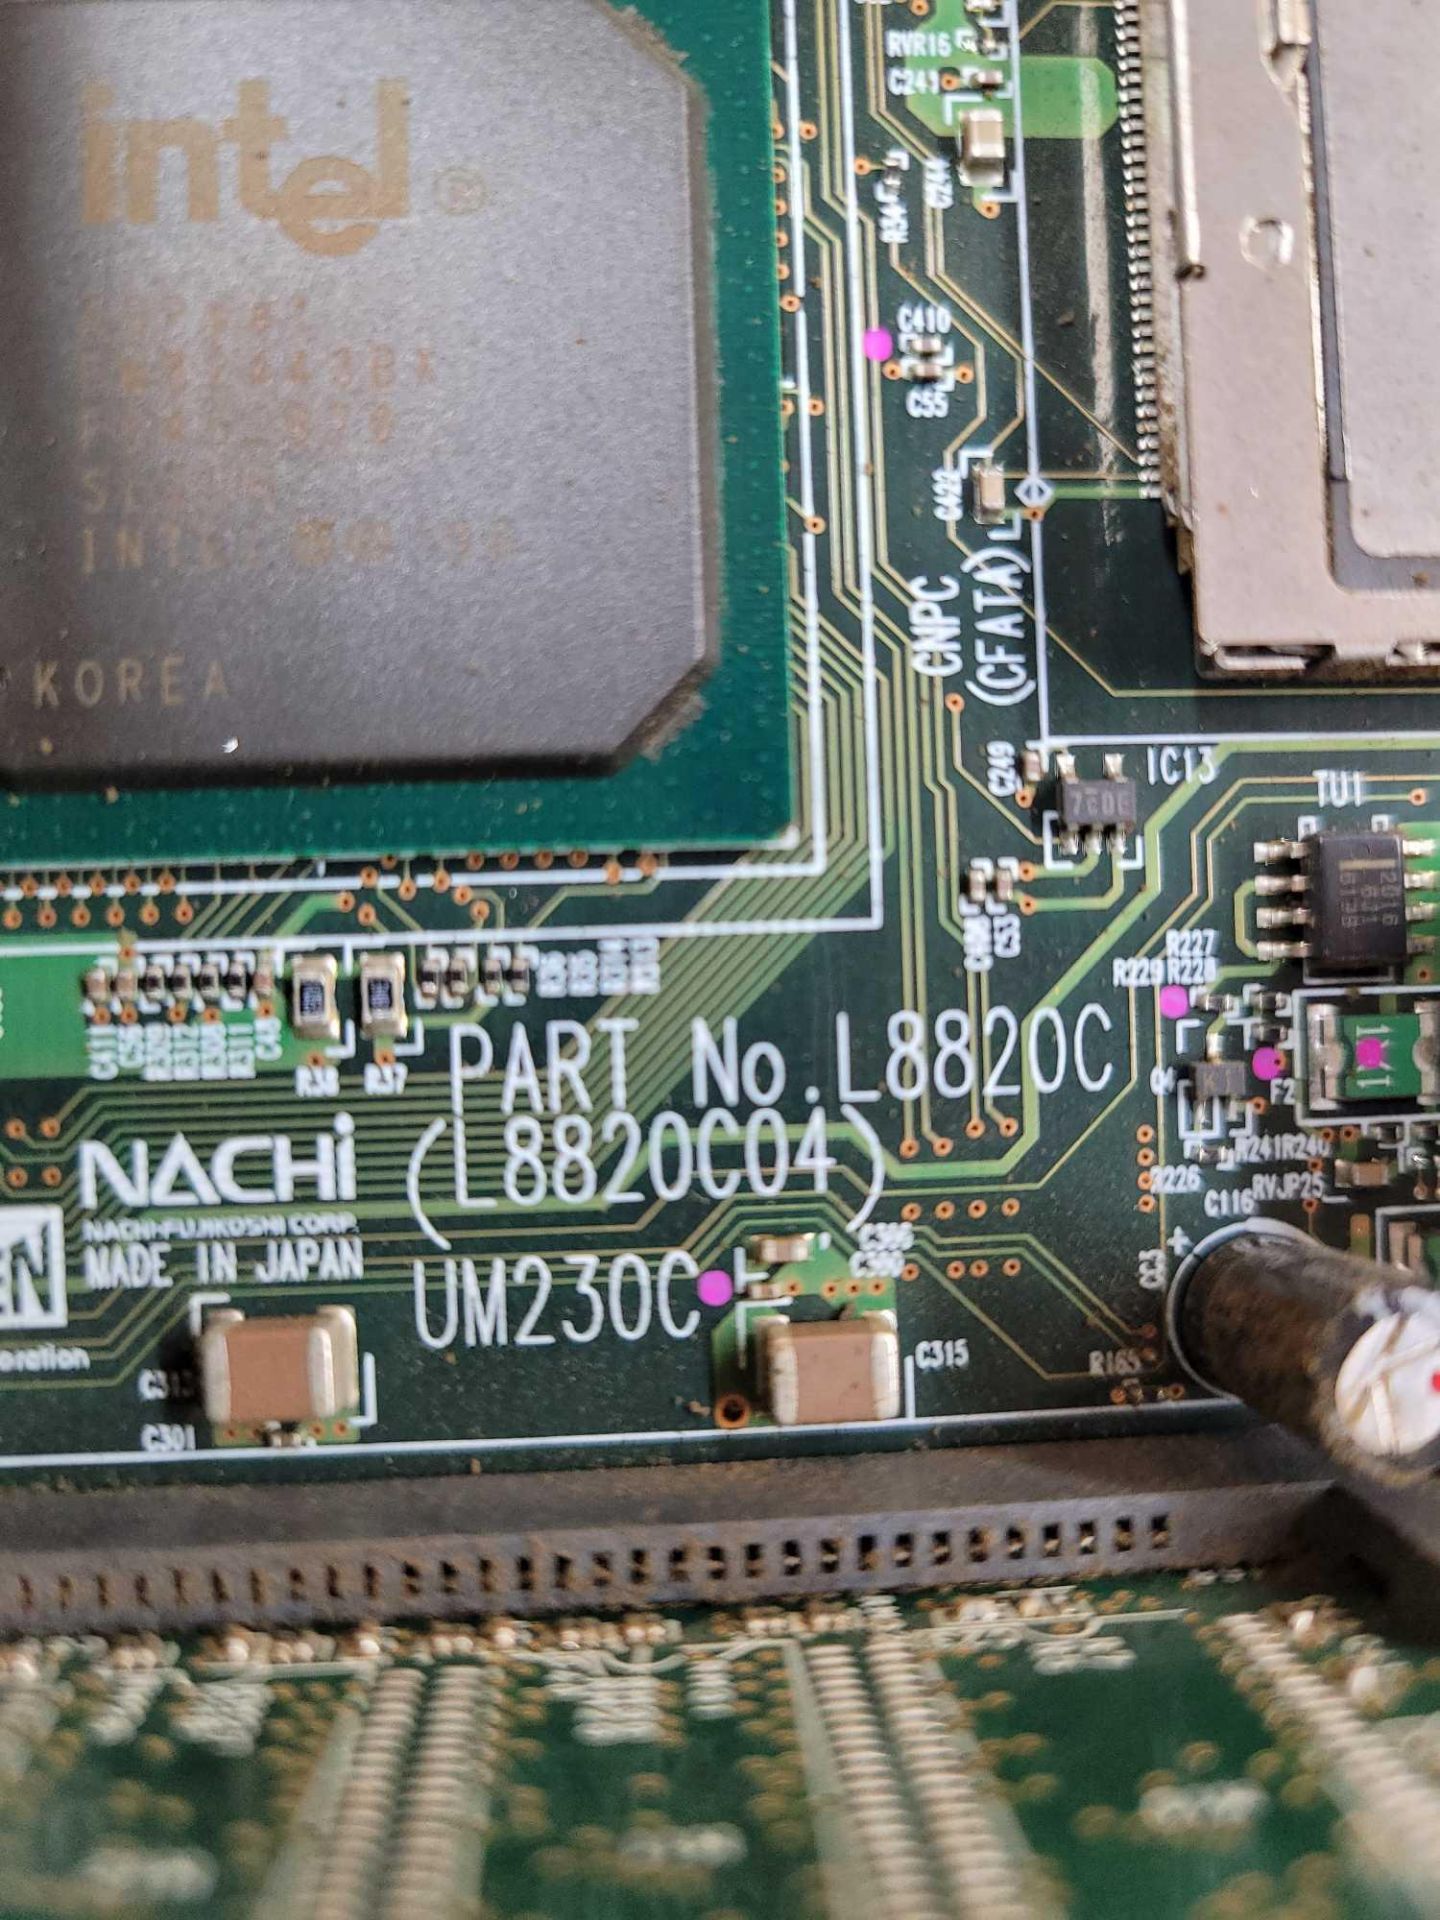 NACHI L8820C (L8820C04) / PCB Board Card - Image 2 of 5